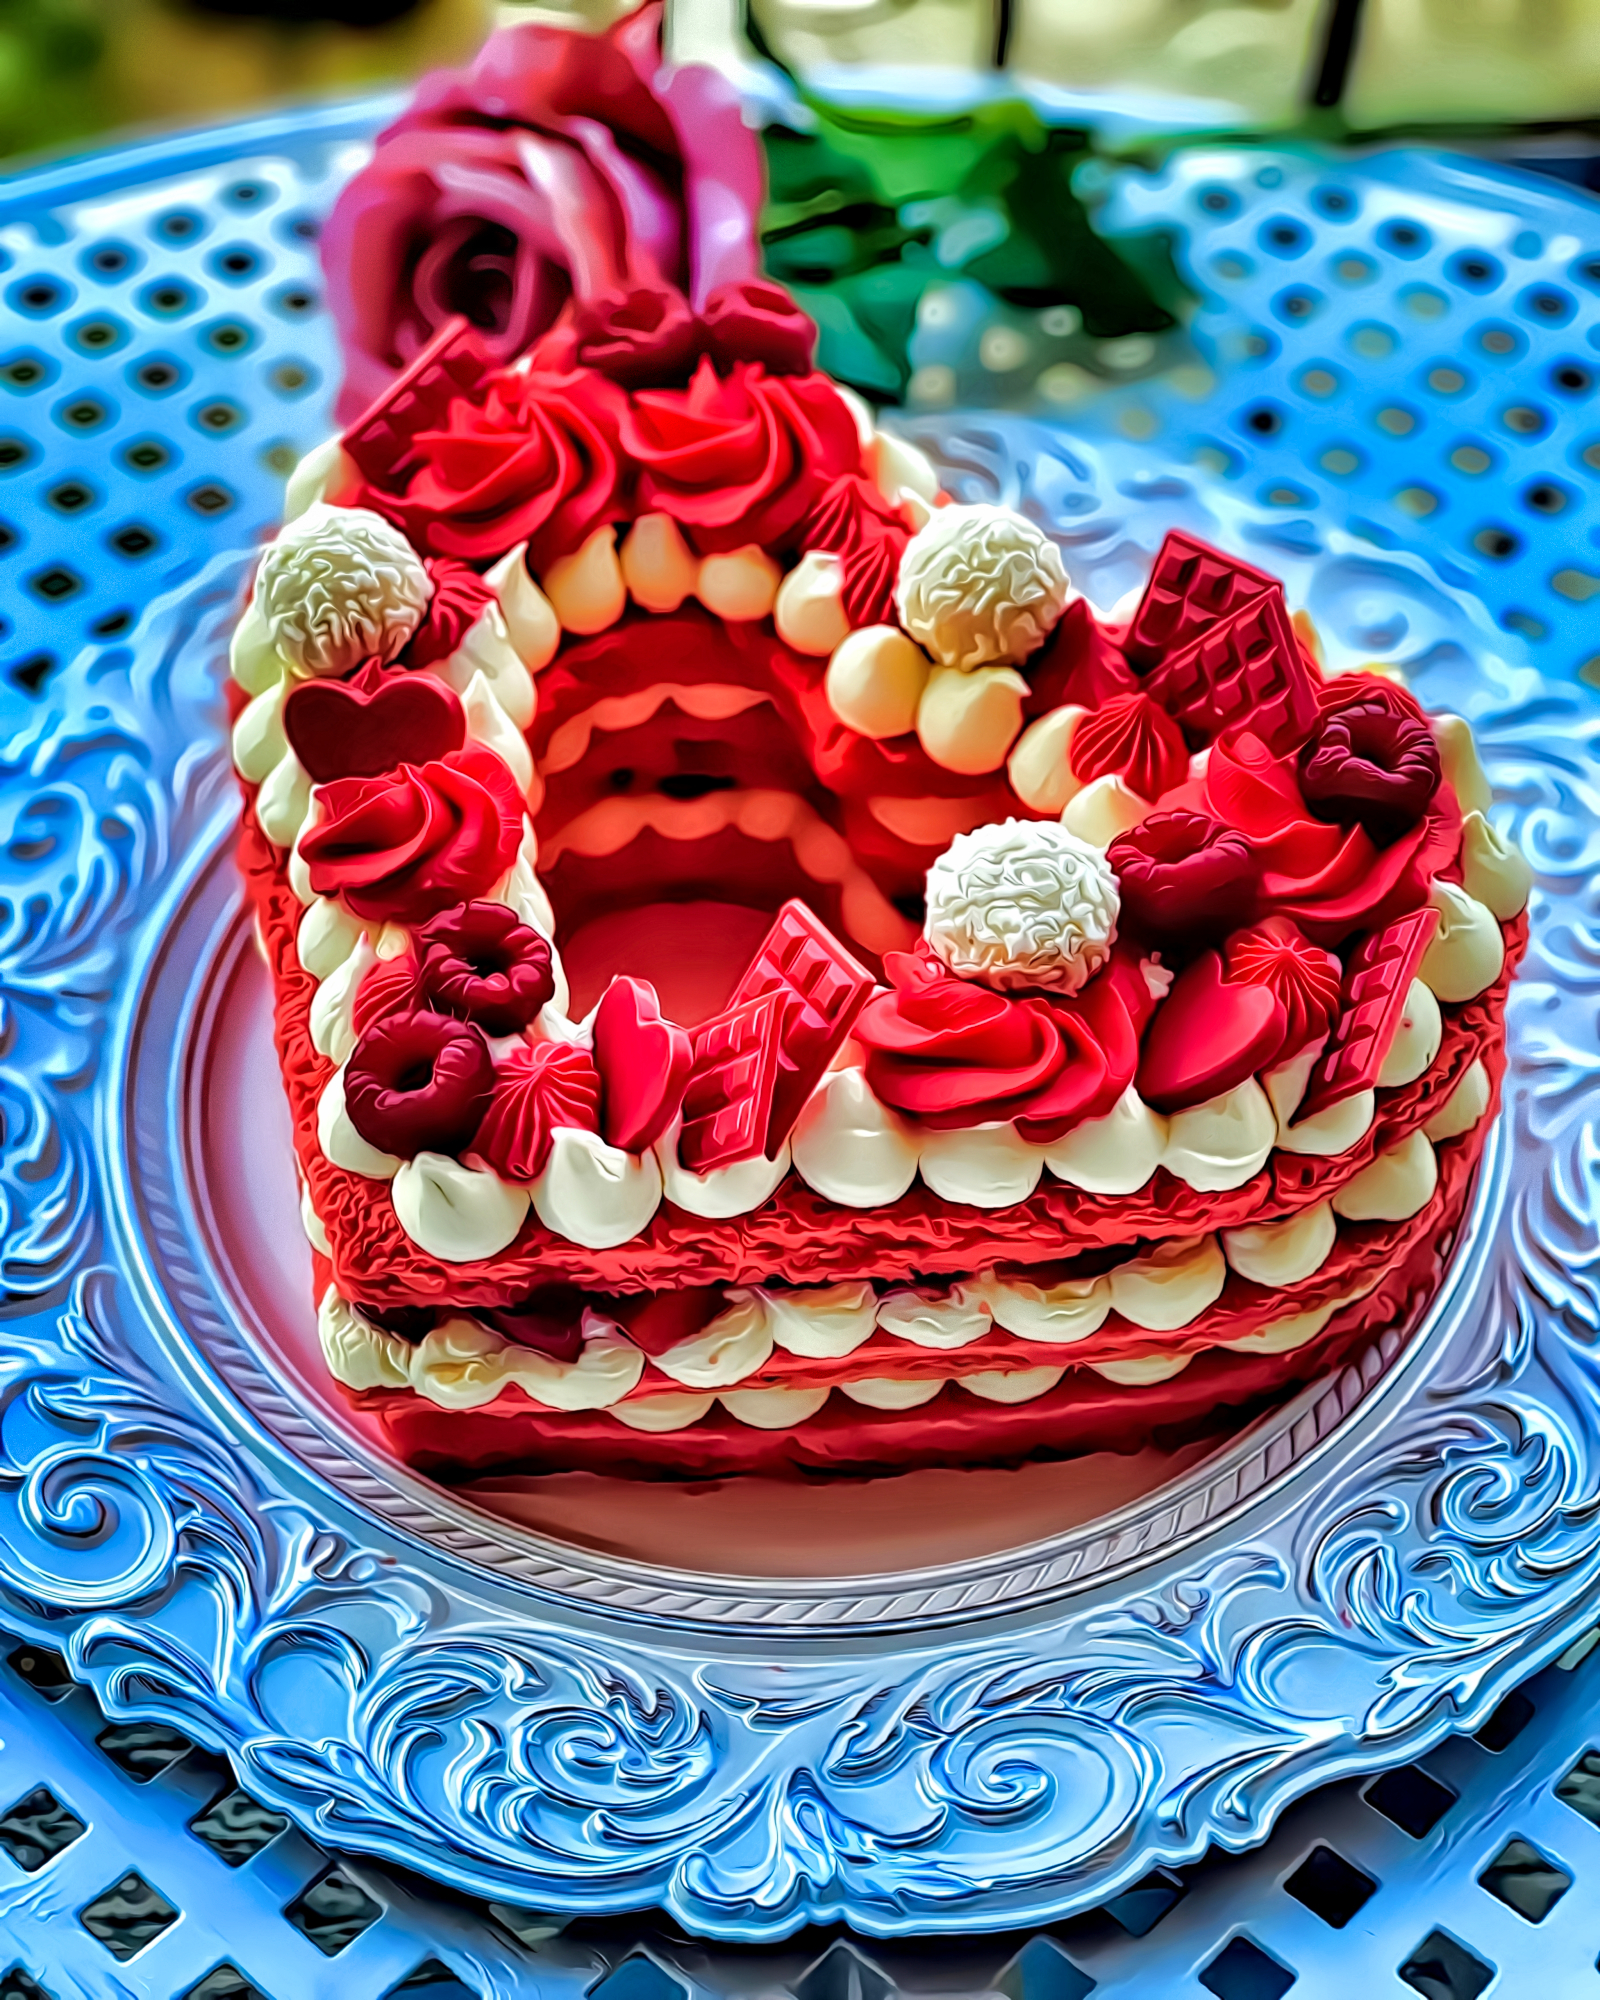 Artwork Digital Art Cream Cake Heart Figure Chocolate Chocolate Cake Colorful Fruit Illustration 1600x2000